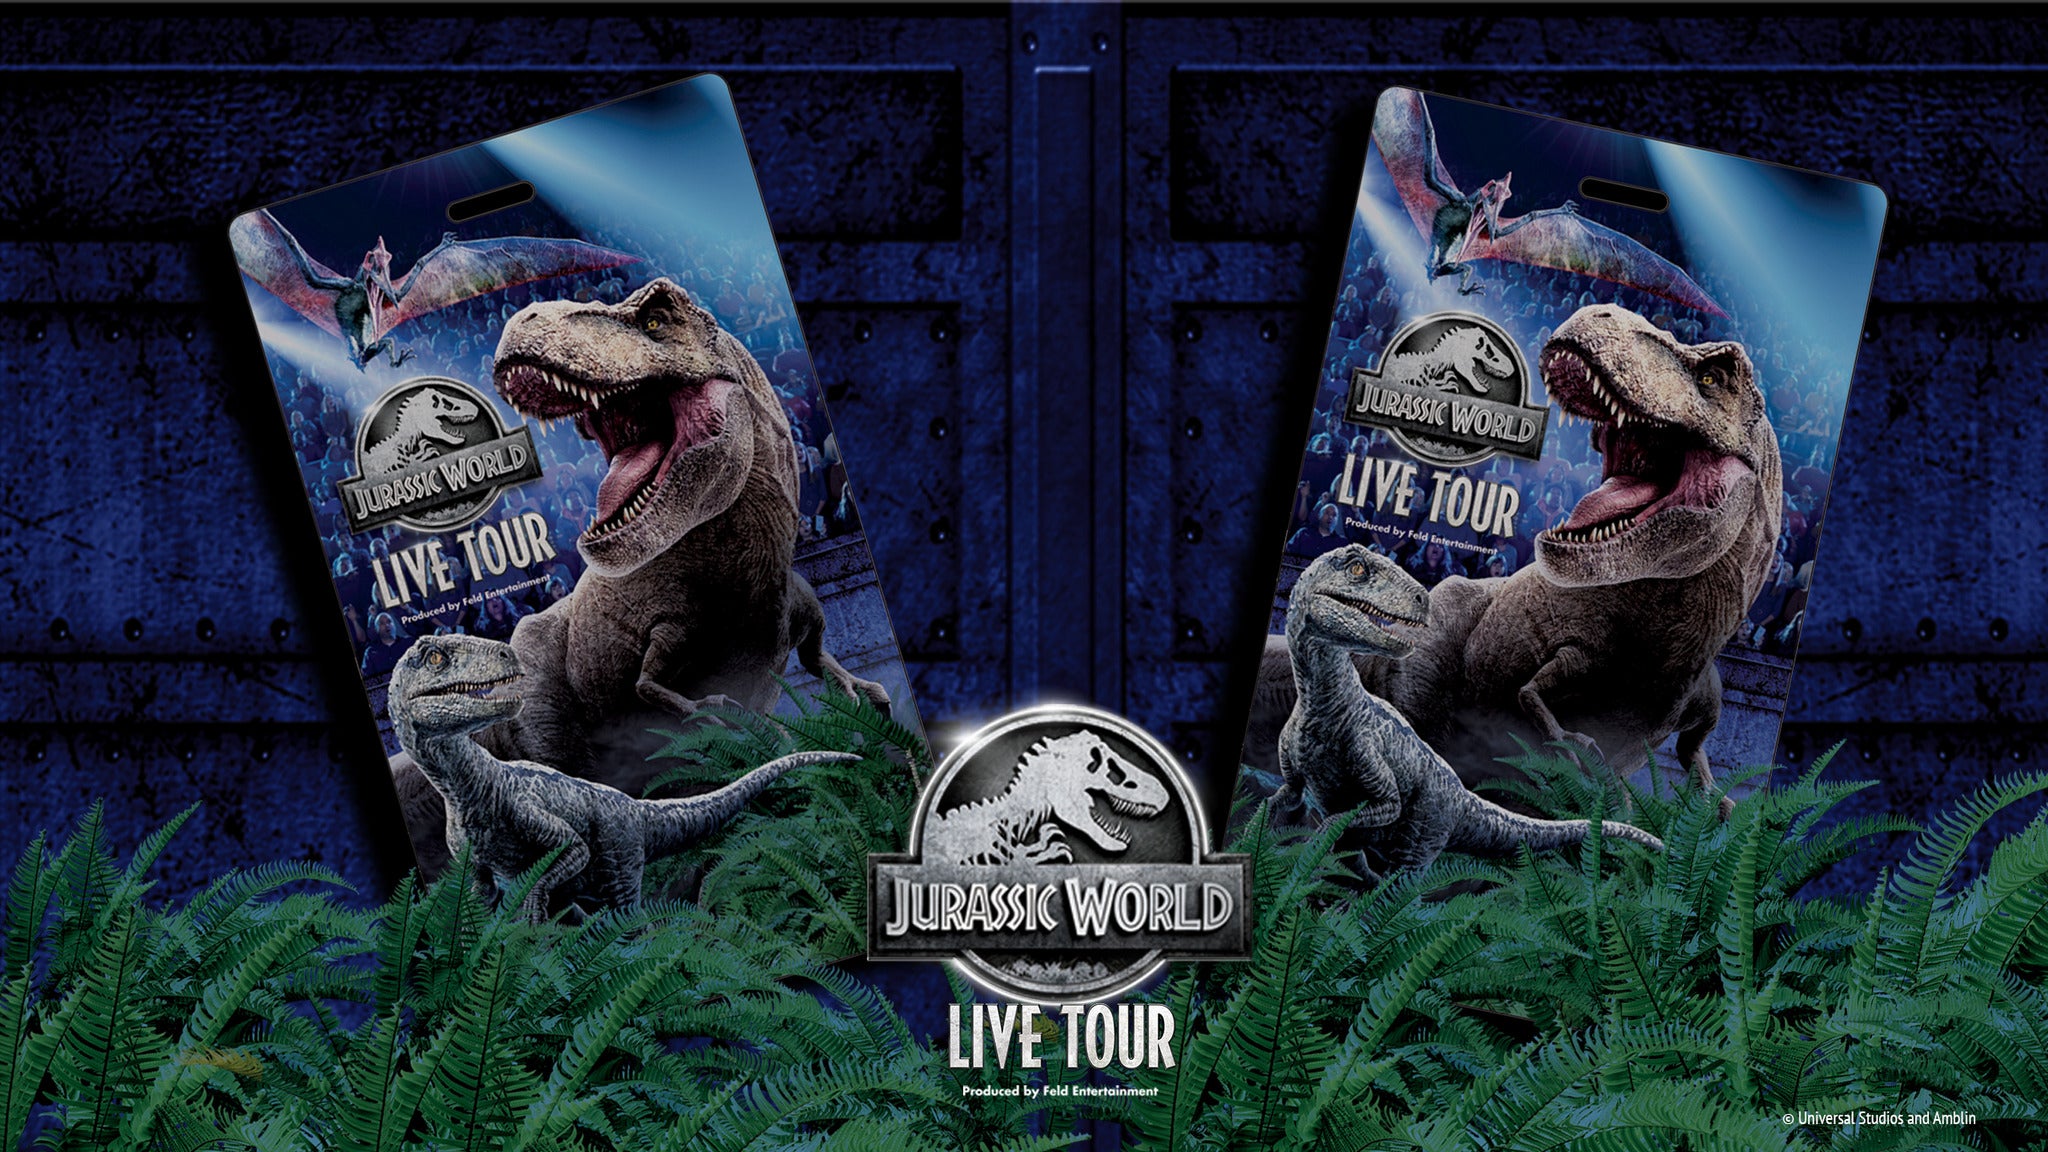 Jurassic World Live Tour Official Souvenir Tag! Tickets Event Dates